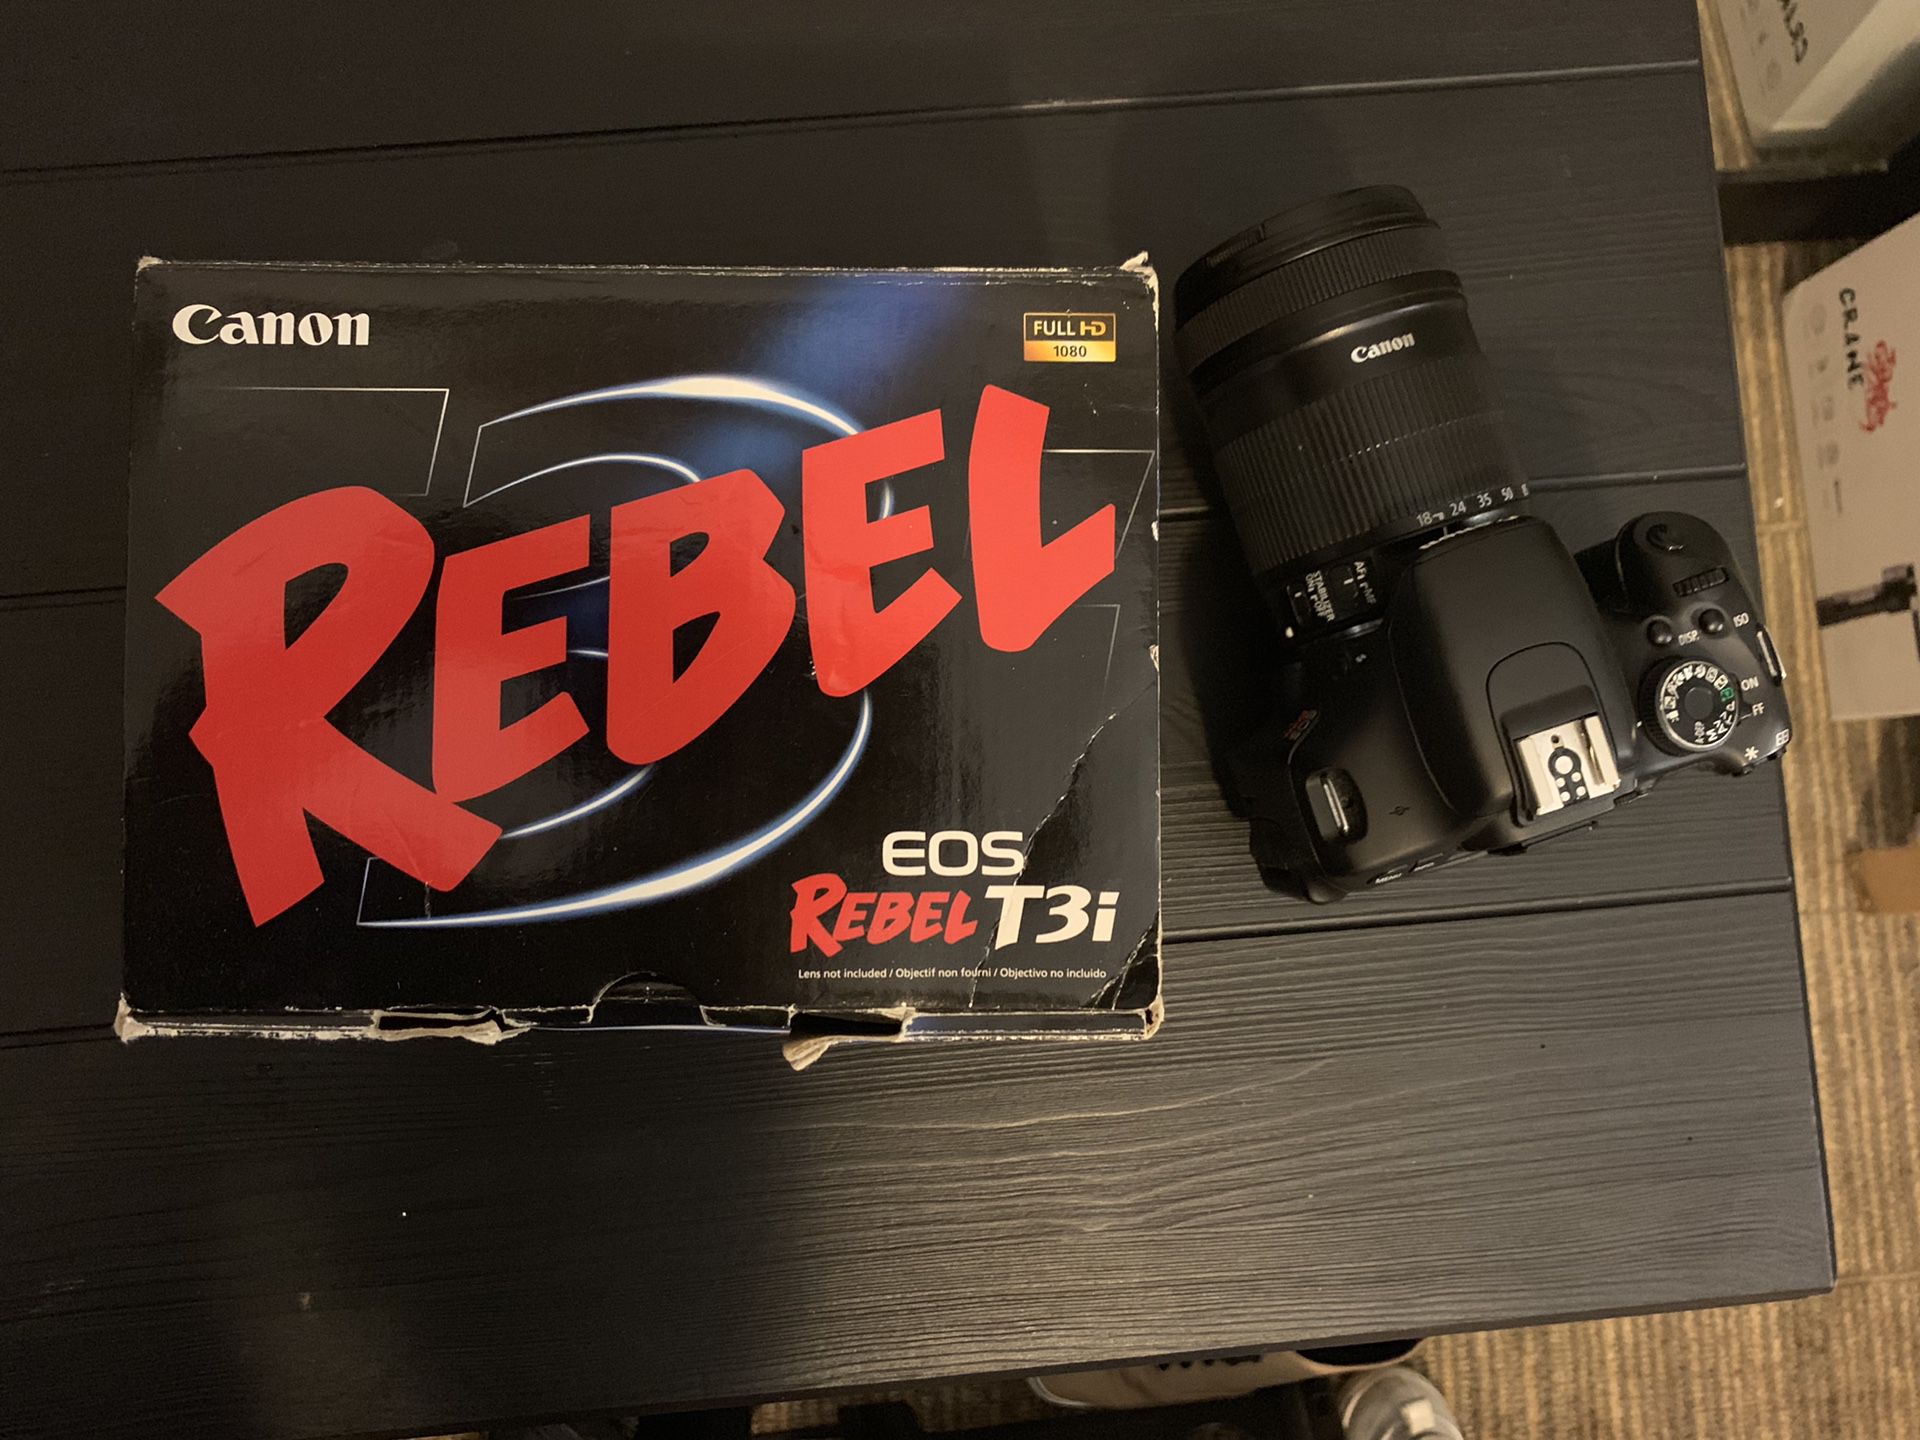 Canon Rebel t3i dslr camera